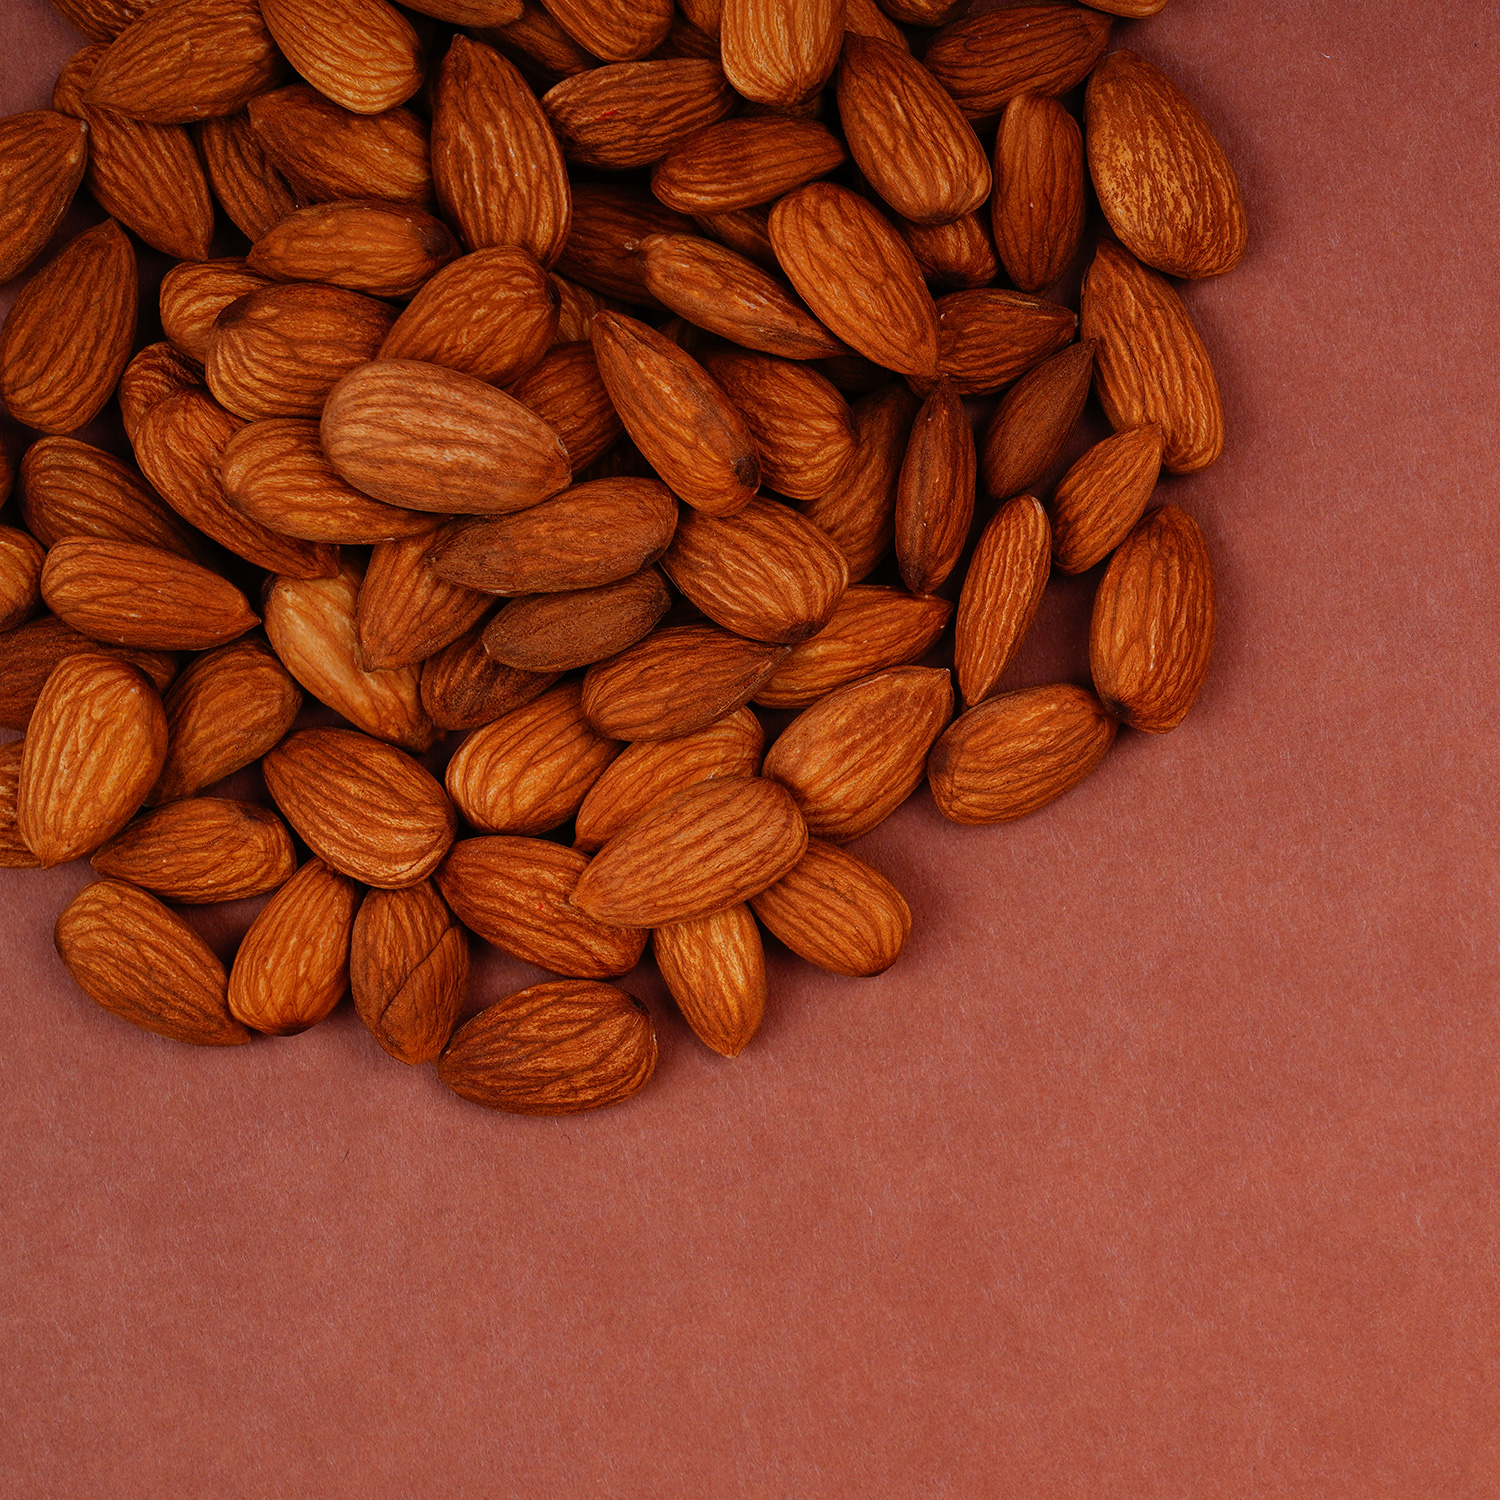 Pearl Mauli Rakhi Set And Bansuri Rakhi With Healthy Almonds